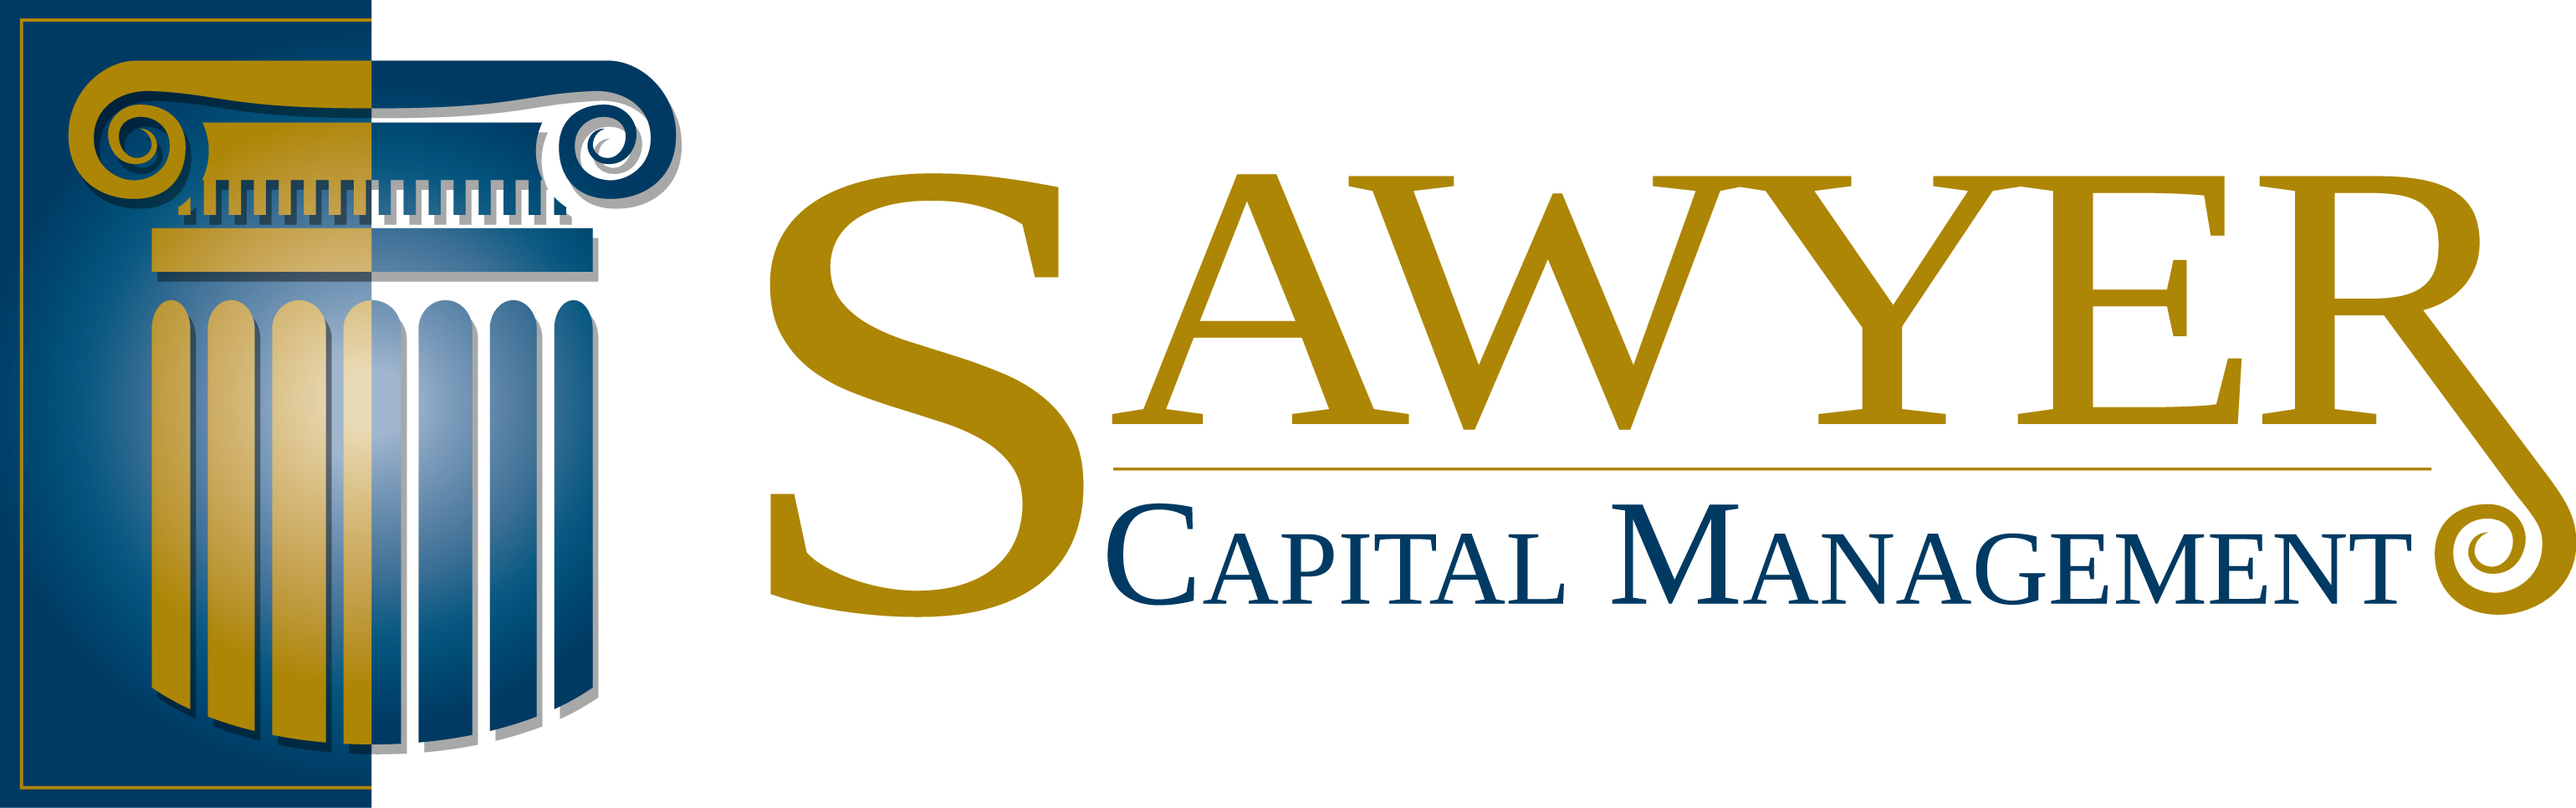 Sawyer Capital Management